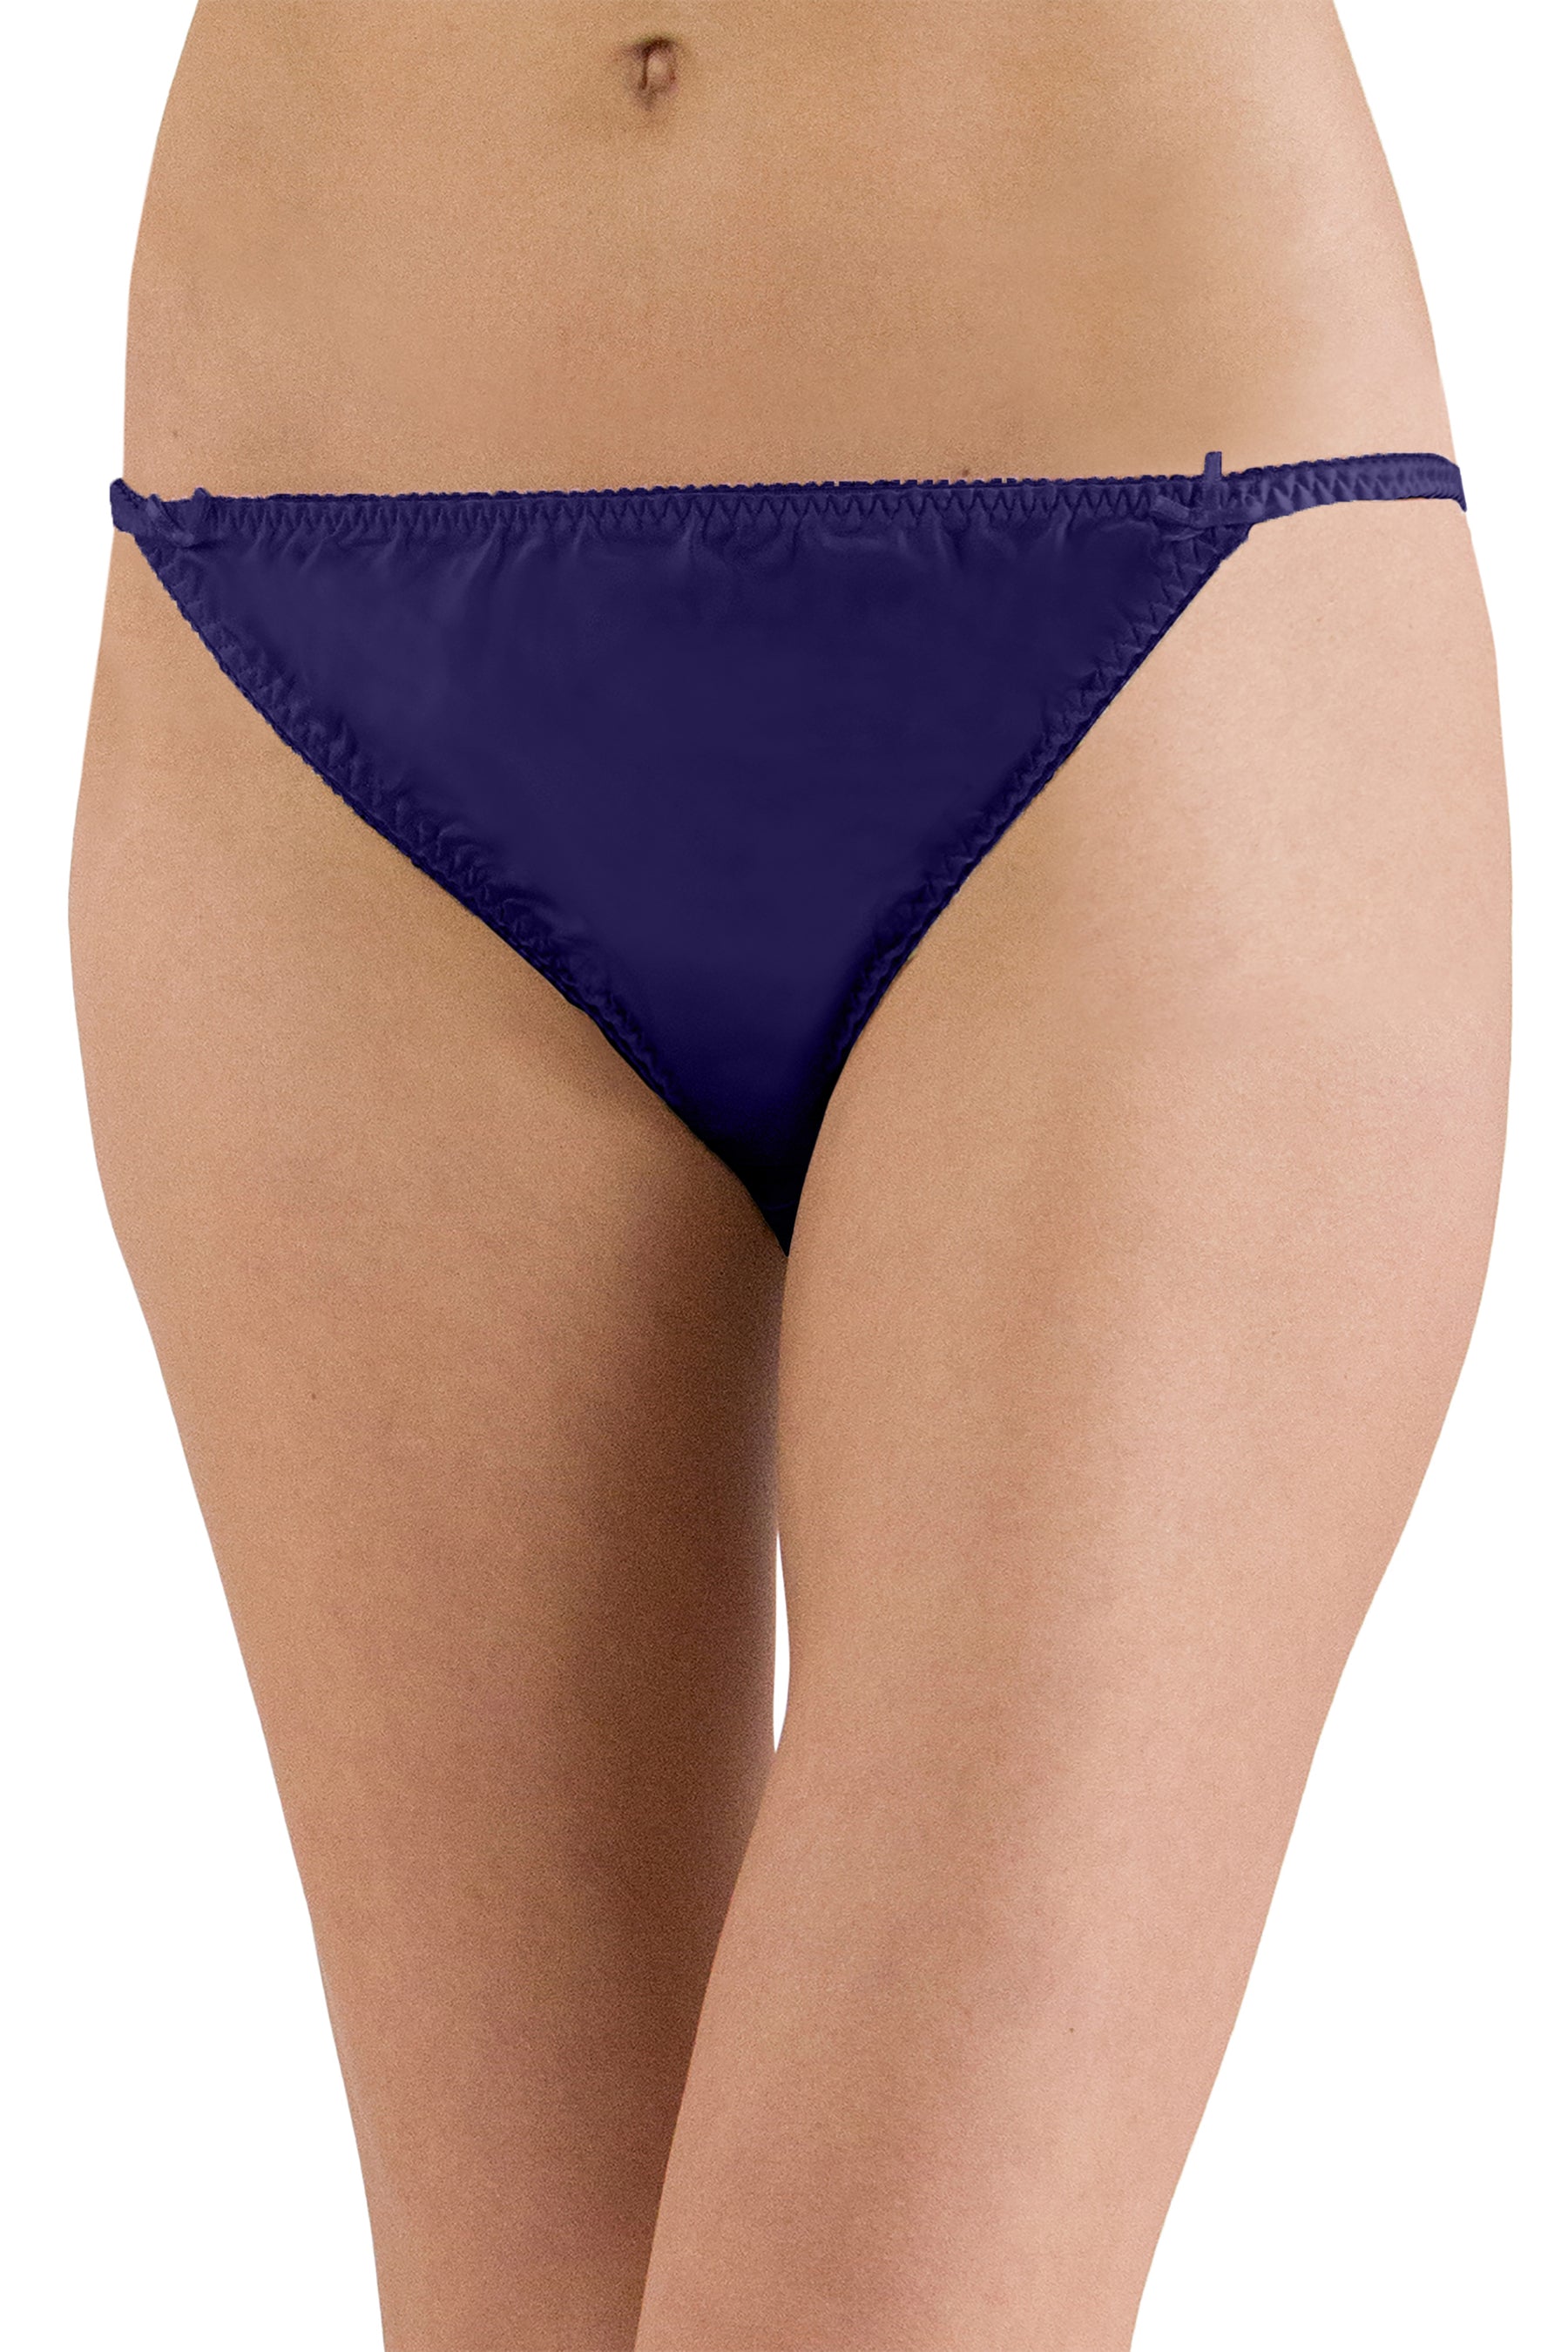 CAICJ98 Women Underwear Women's Illumination String Bikini Panties, Silky  Stretch & Satin Trim,Blue 